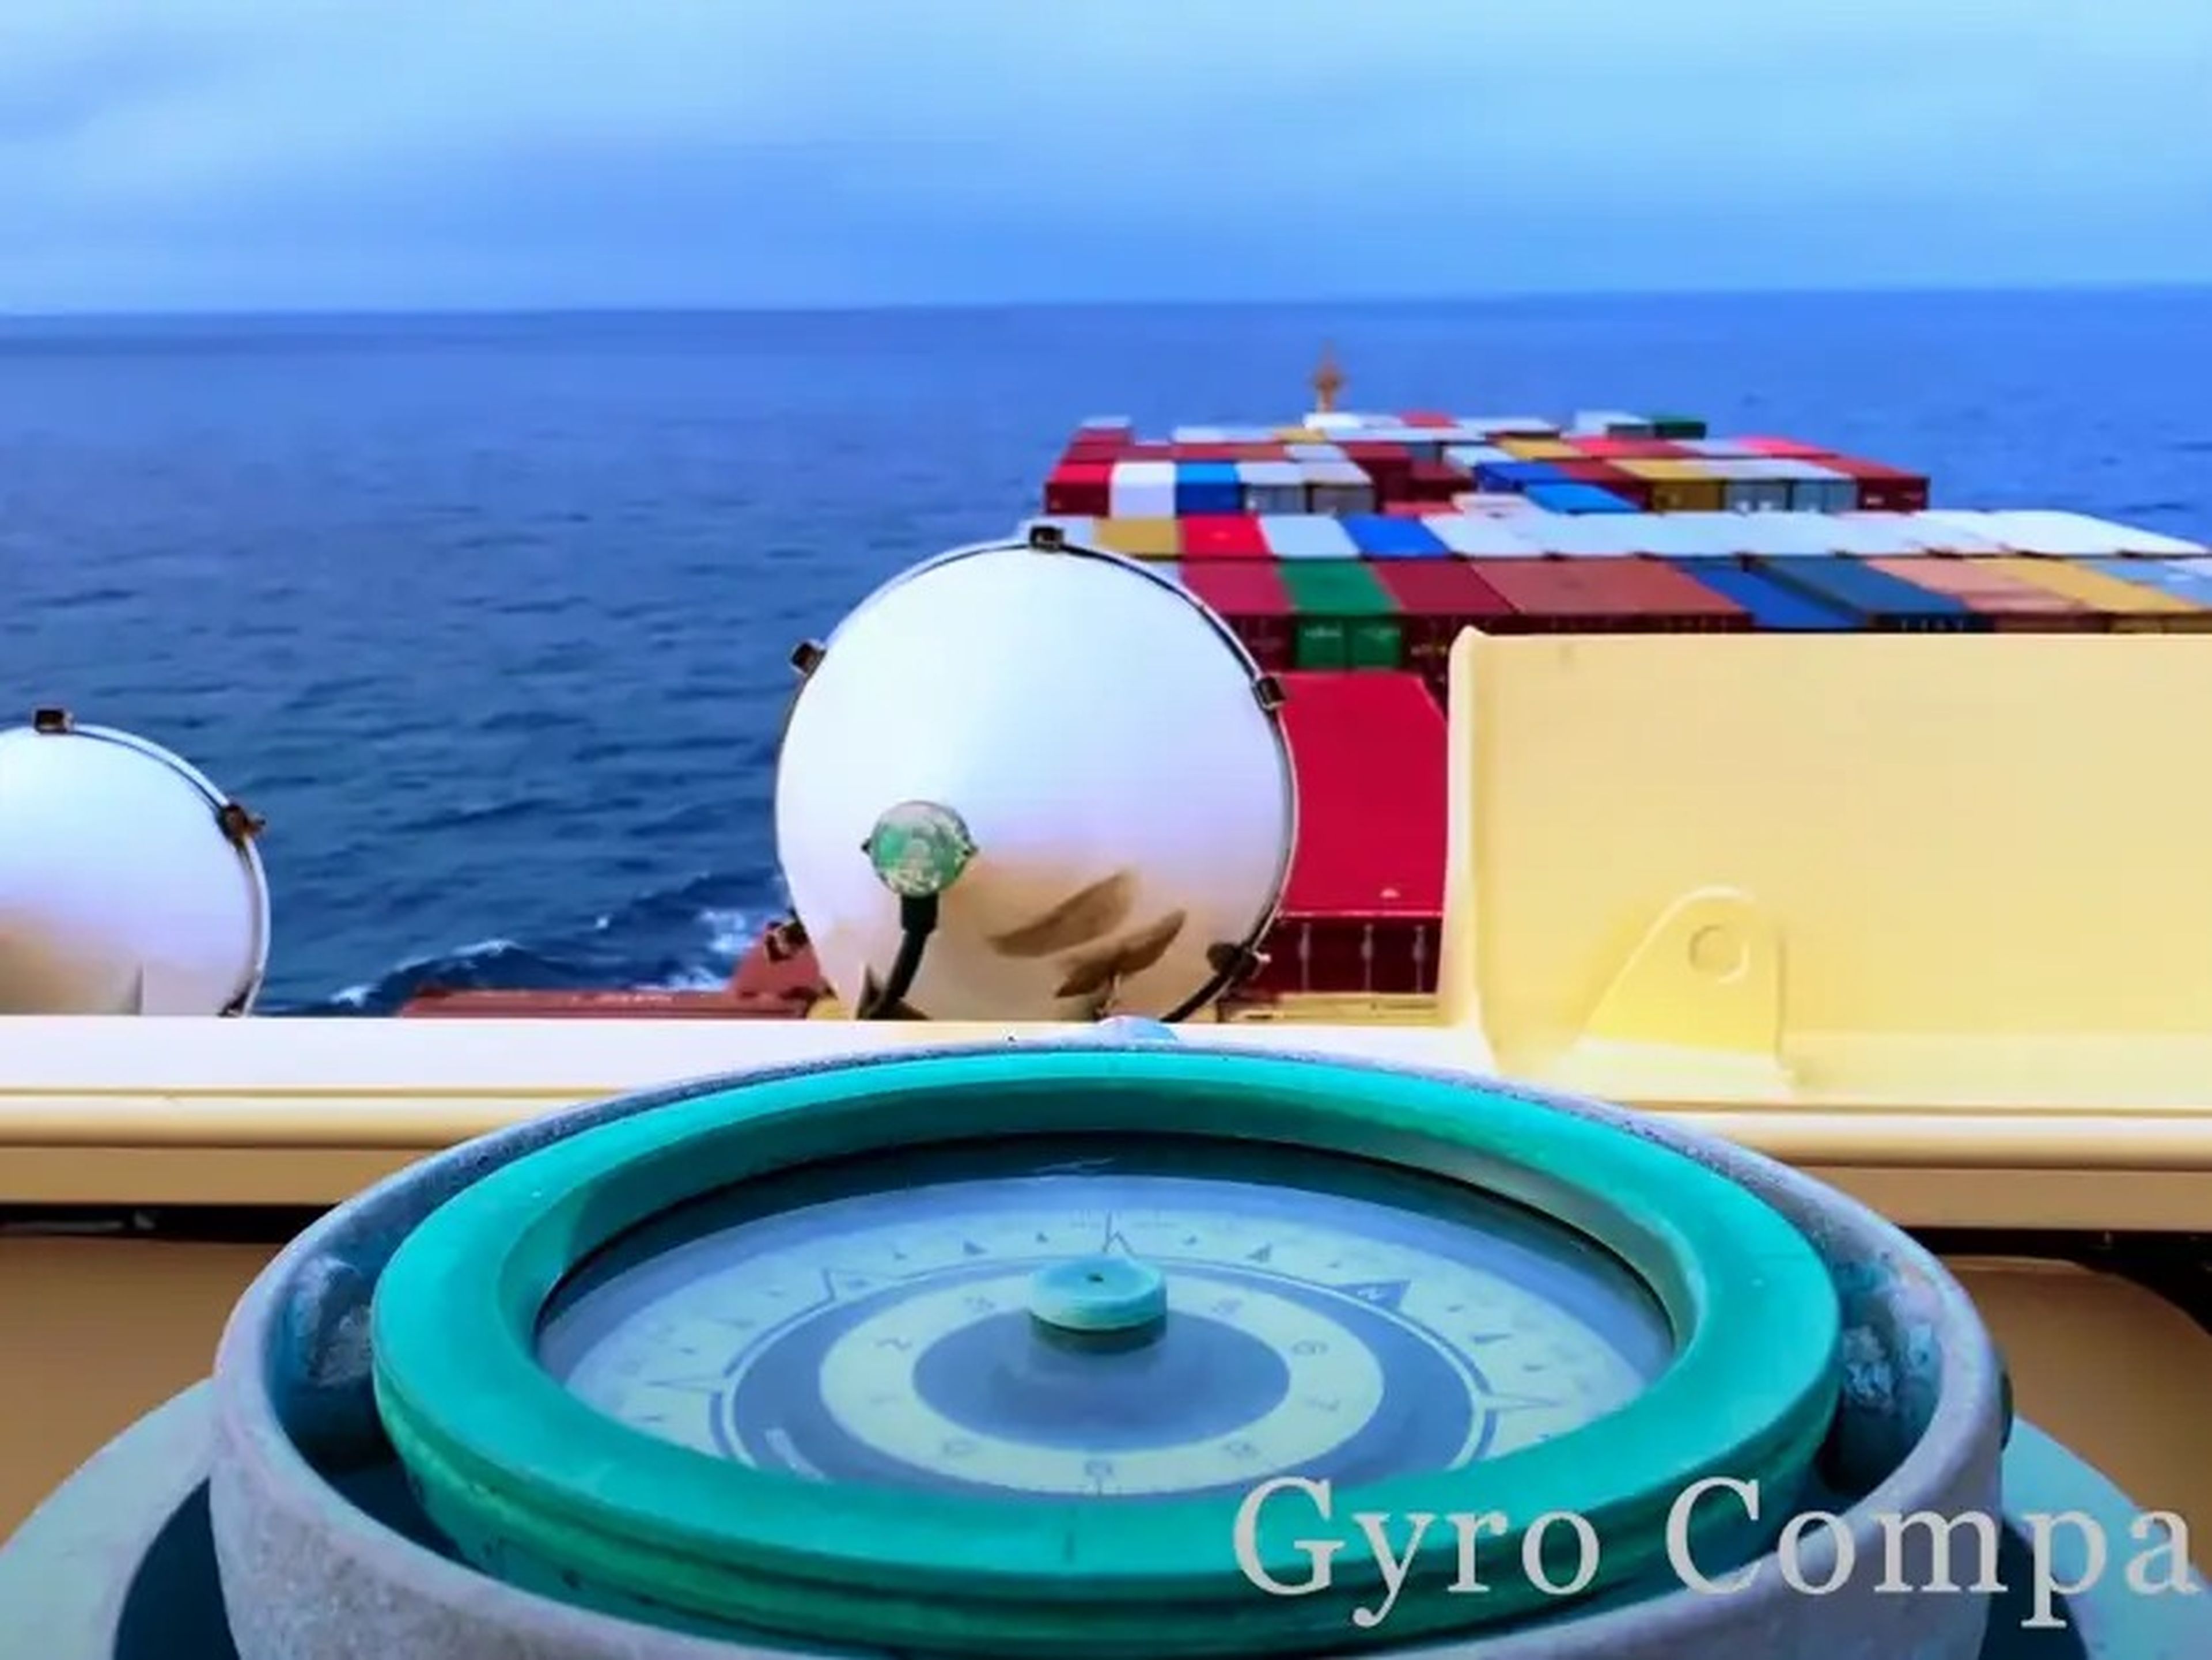 The ship's gyro compass